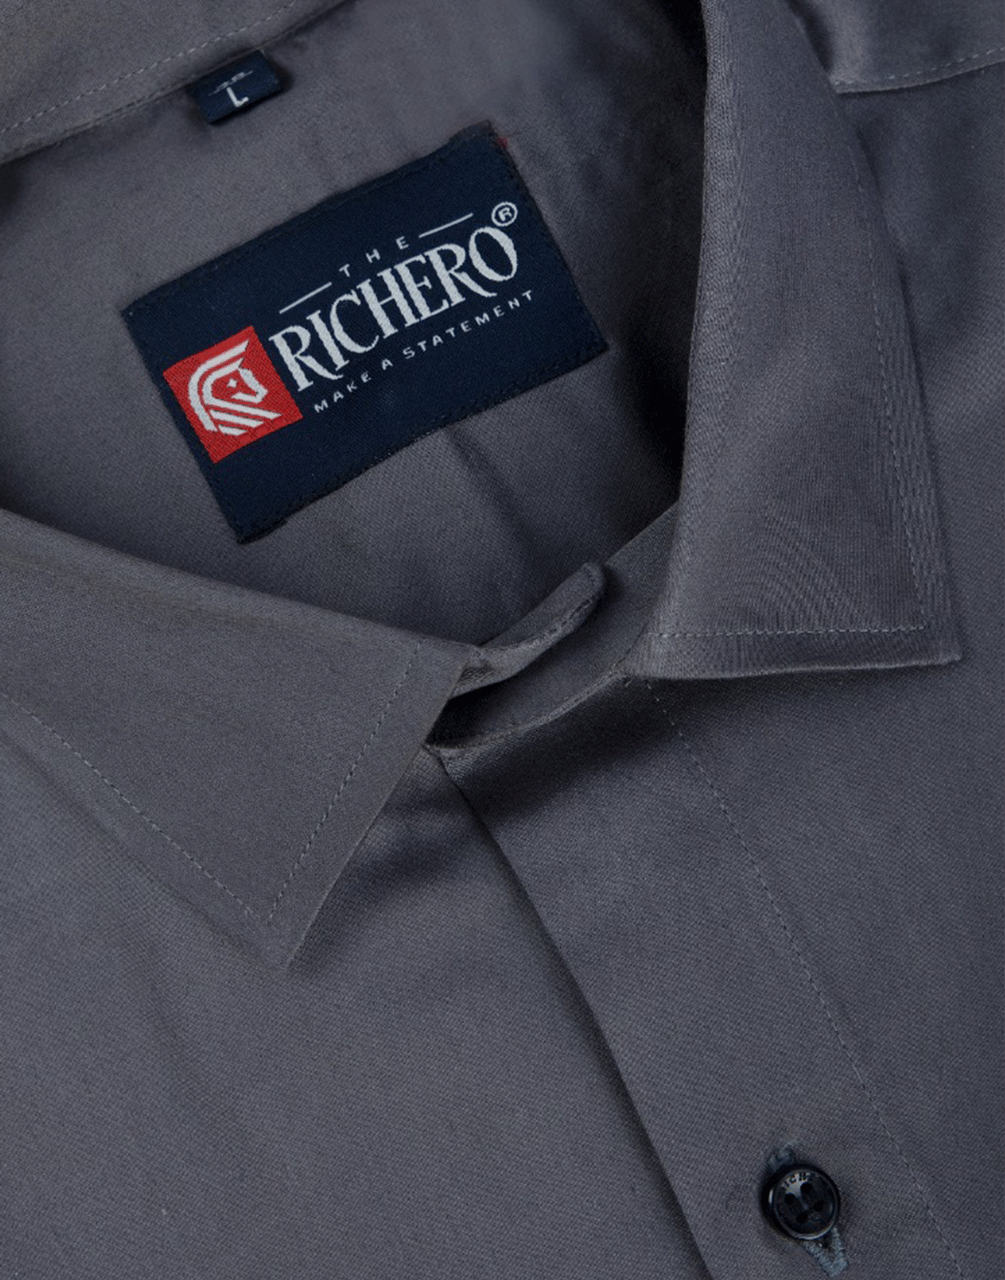 Grey color & office wear plain shirt